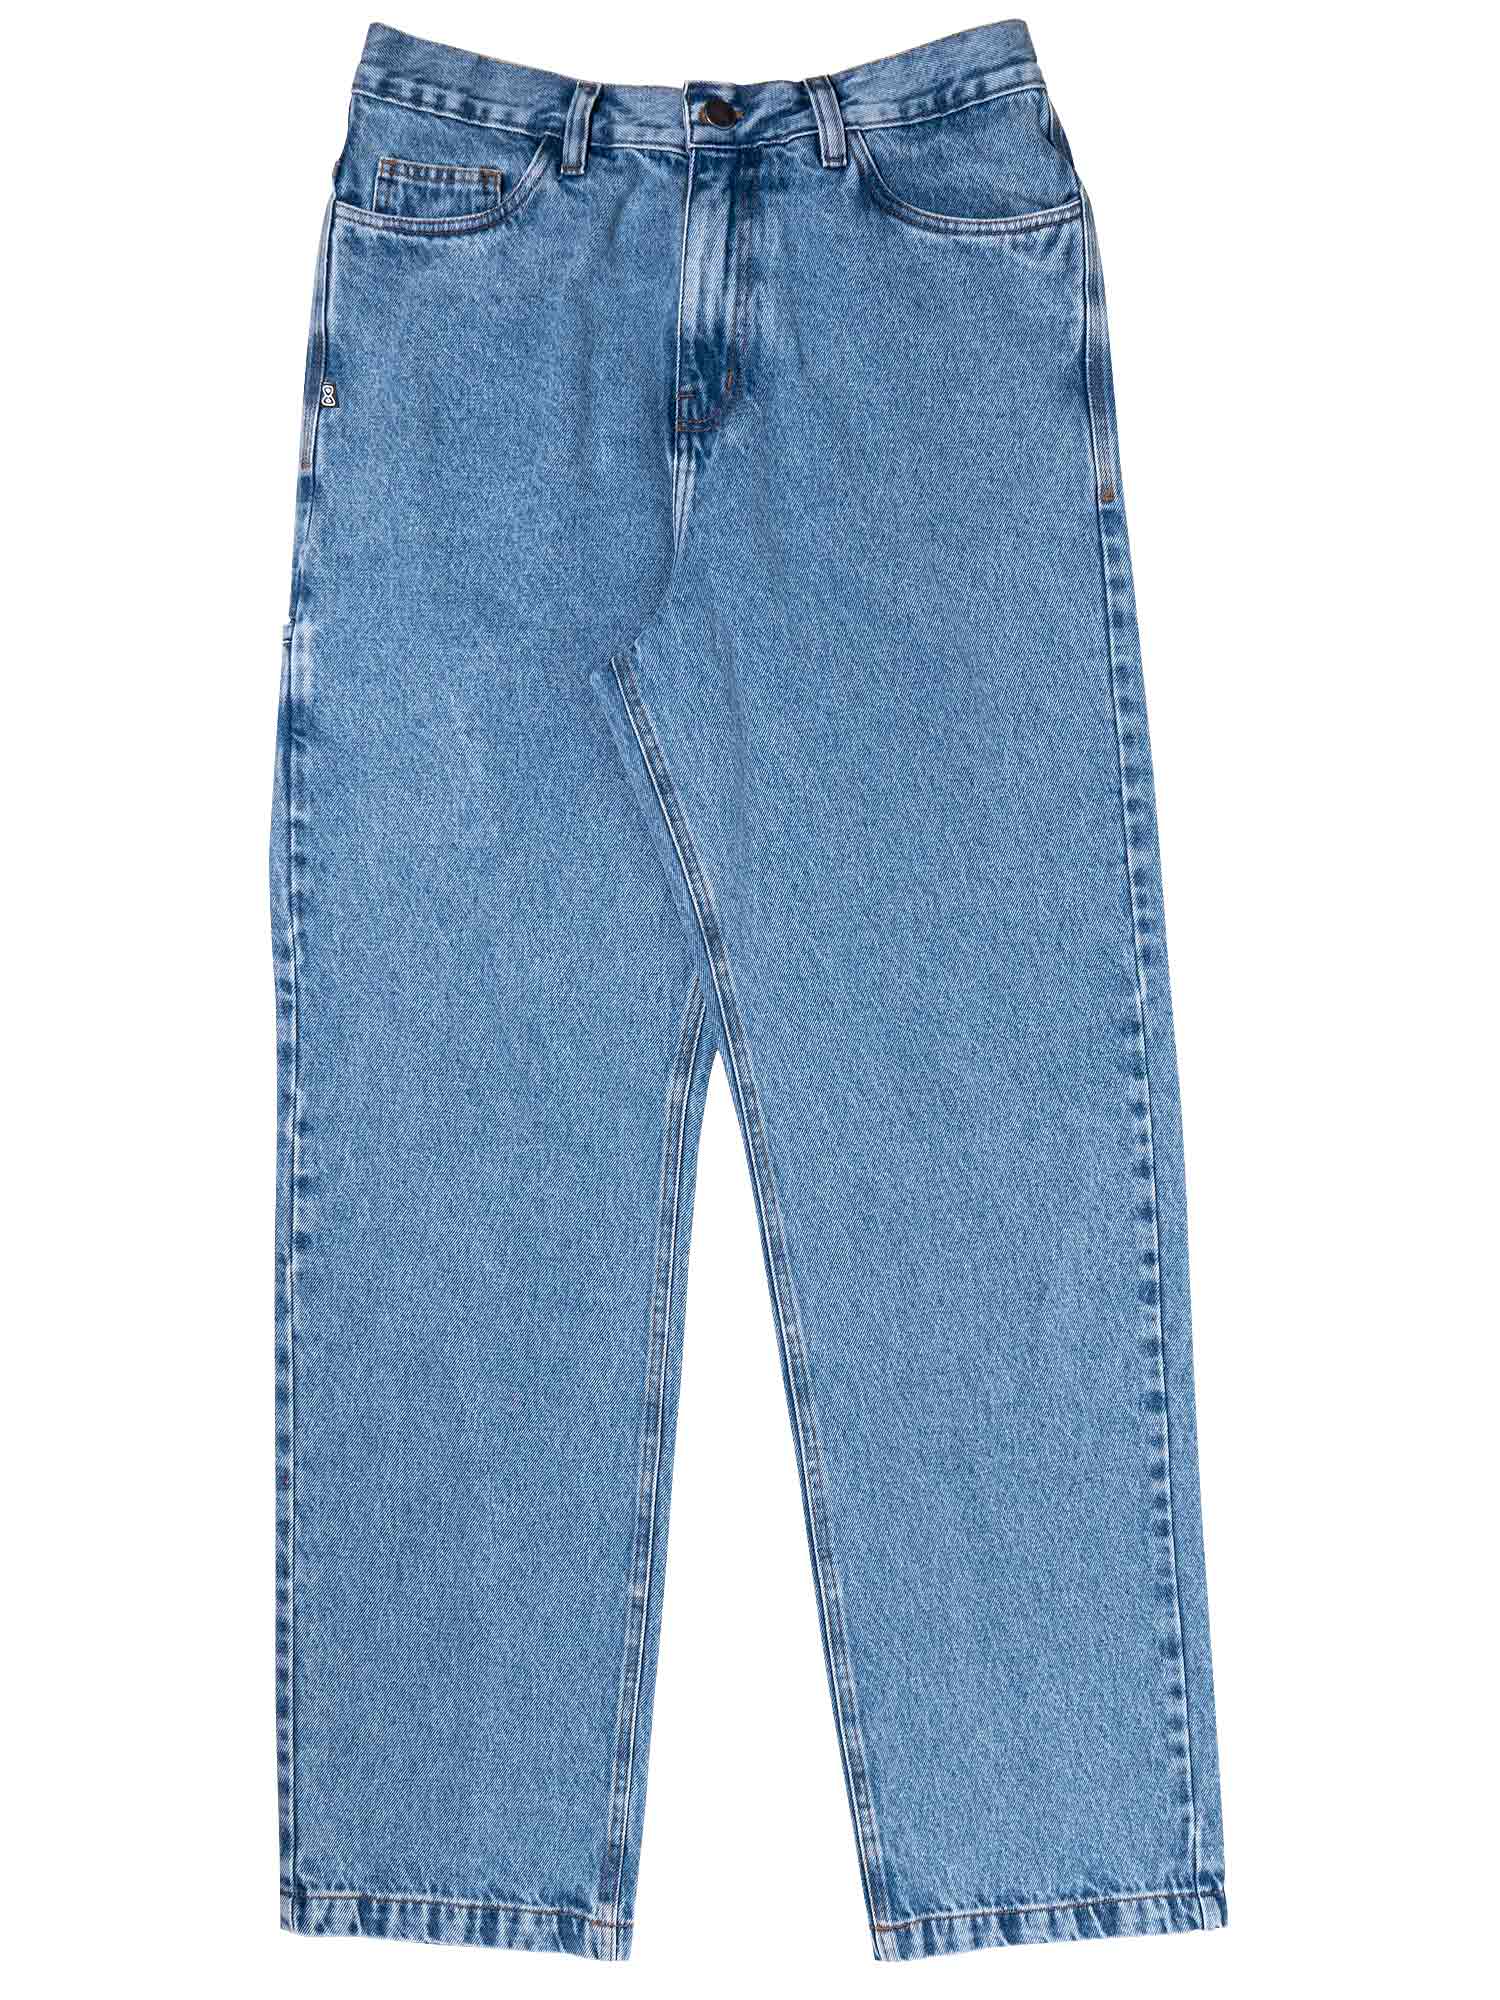 Calca-Future-Jeans-93_Gs-Azul-Frente